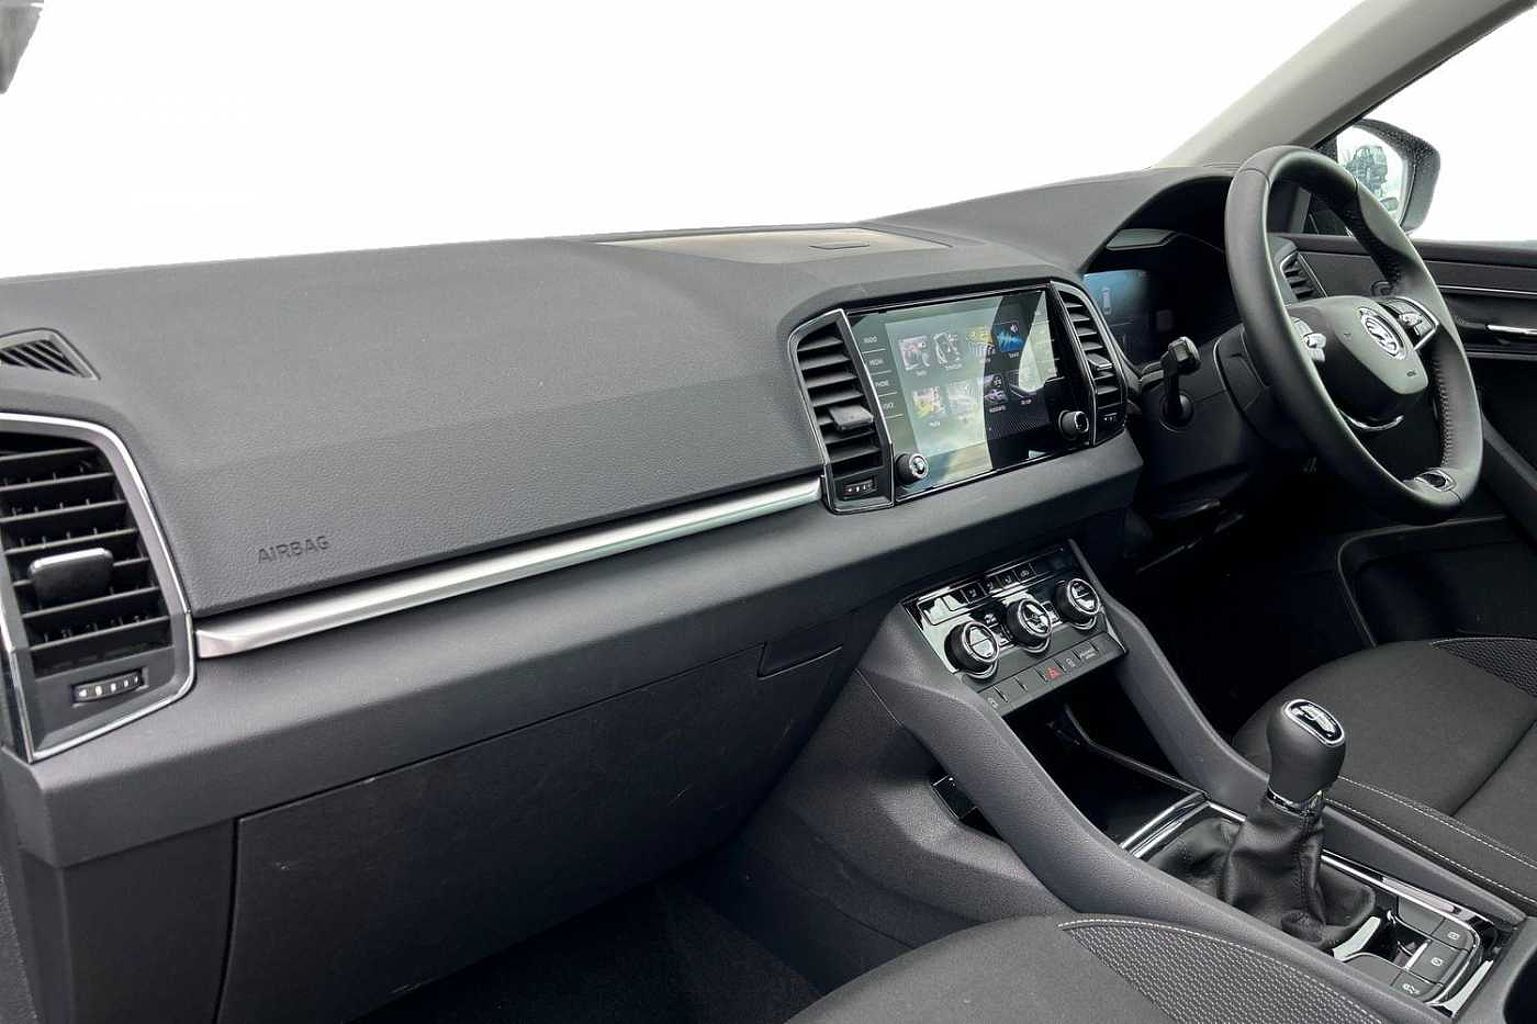 SKODA Karoq SUV 1.0 TSI (110ps) SE Drive